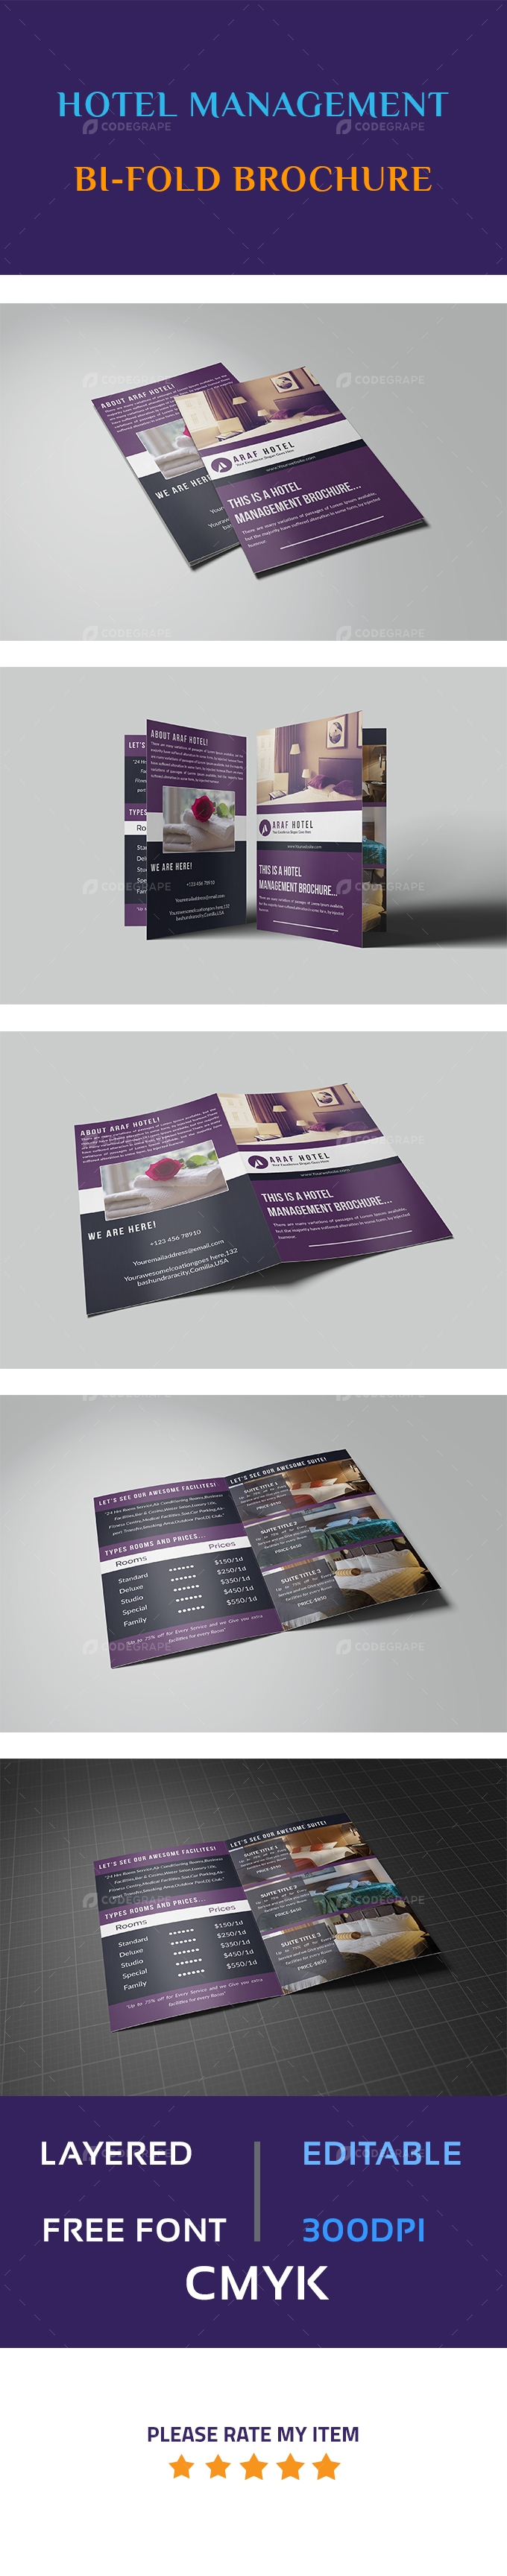 Hotel Management Bi-Fold Brochure